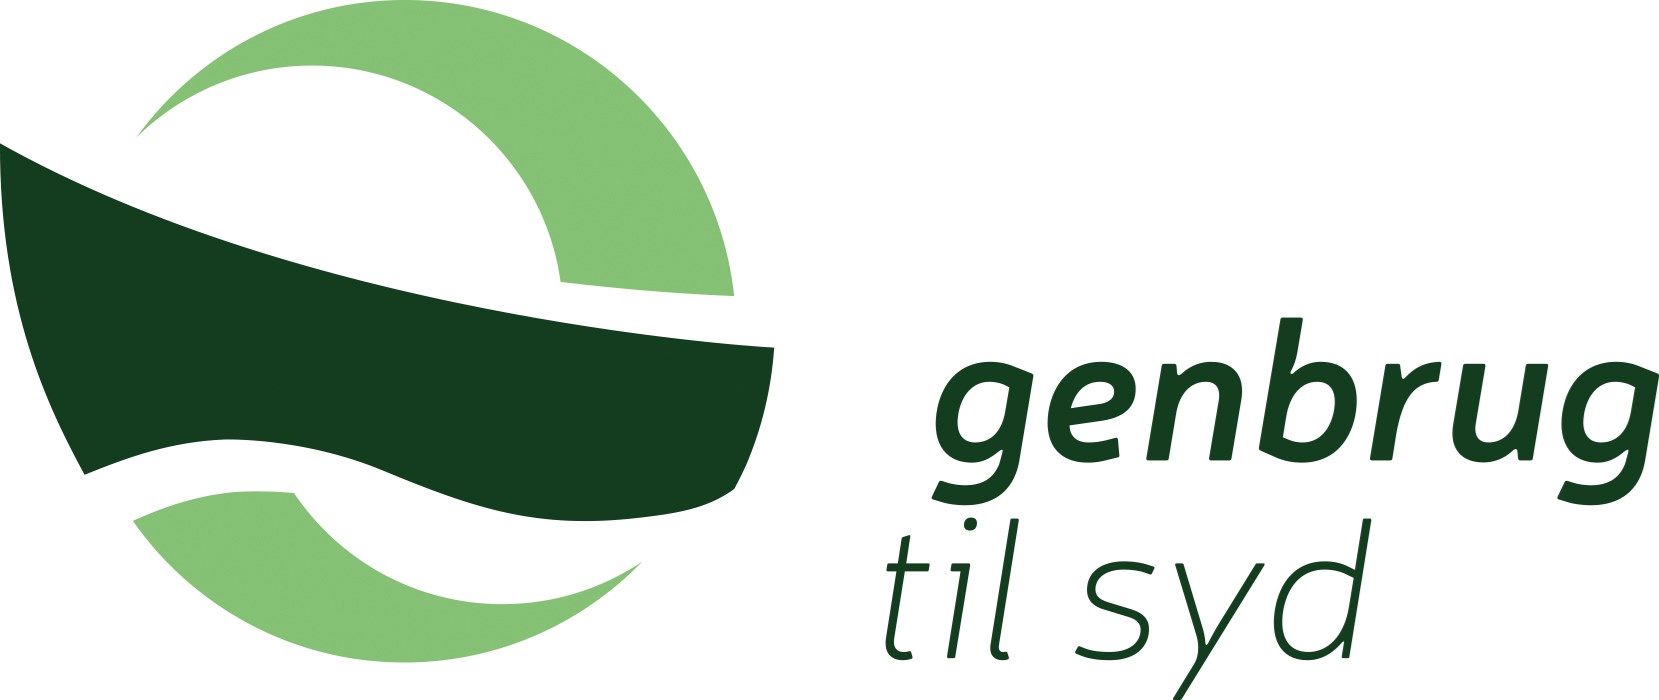 GTS_logo_RGB.jpg